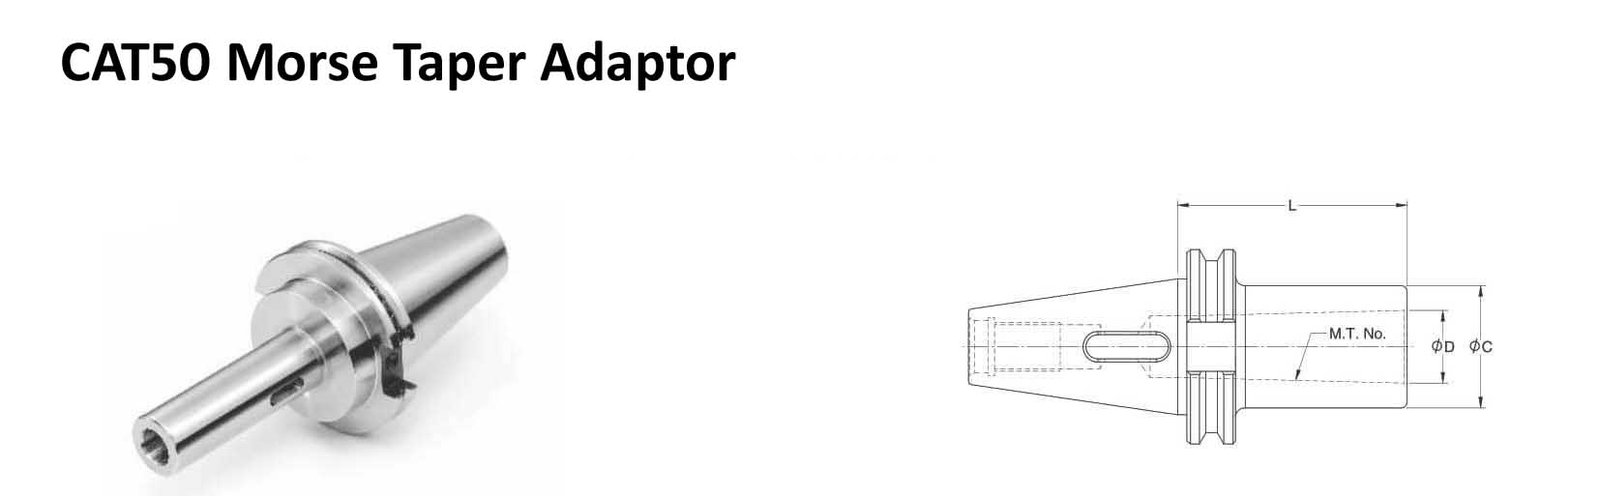 CAT50 MT 01 - 1.77 Morse Taper Adapter (Balanced to 2.5G 25000 RPM)